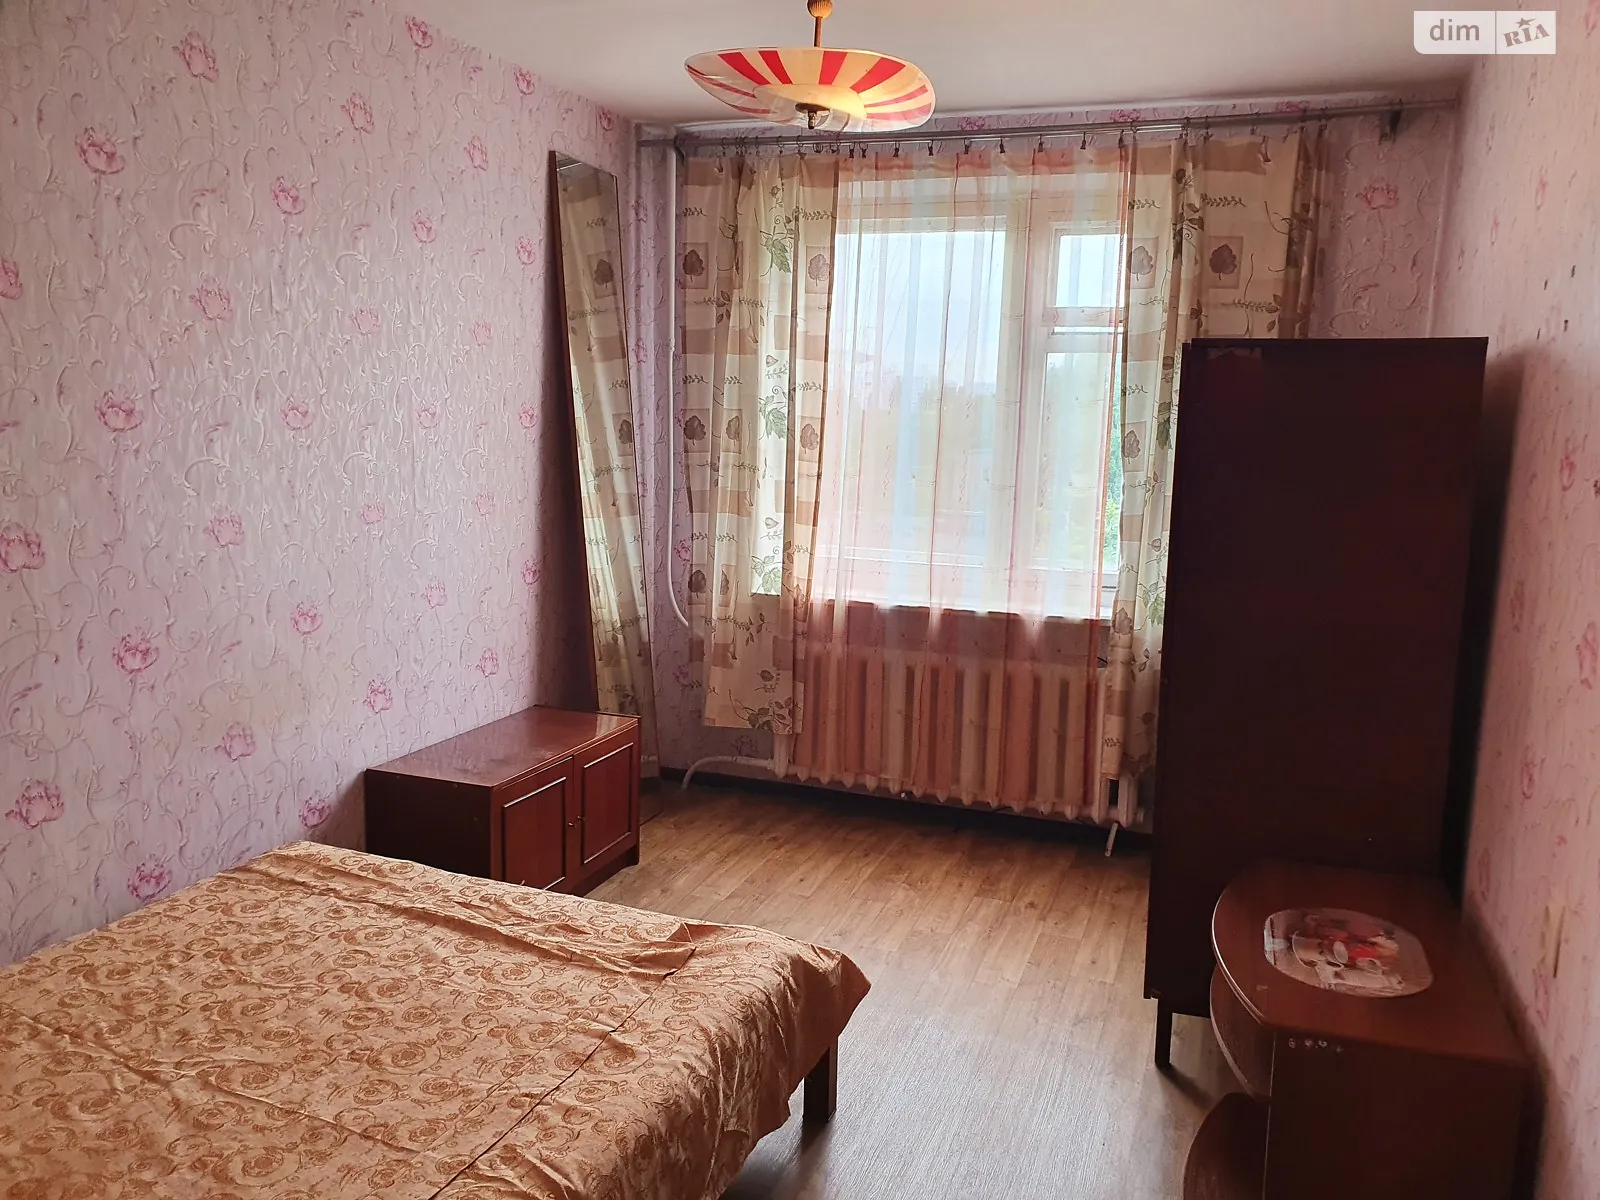 Сдается в аренду 2-комнатная квартира 54 кв. м в Одессе, цена: 5500 грн - фото 1